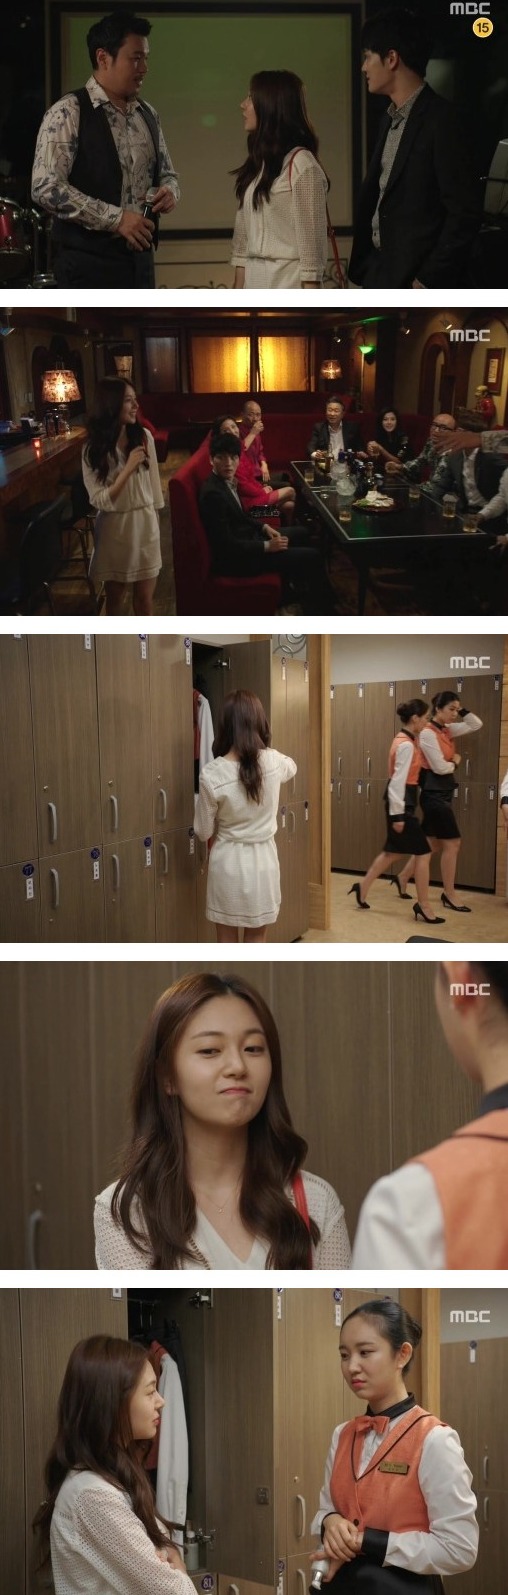 episode 25 captures for the Korean drama 'Triangle - Drama'